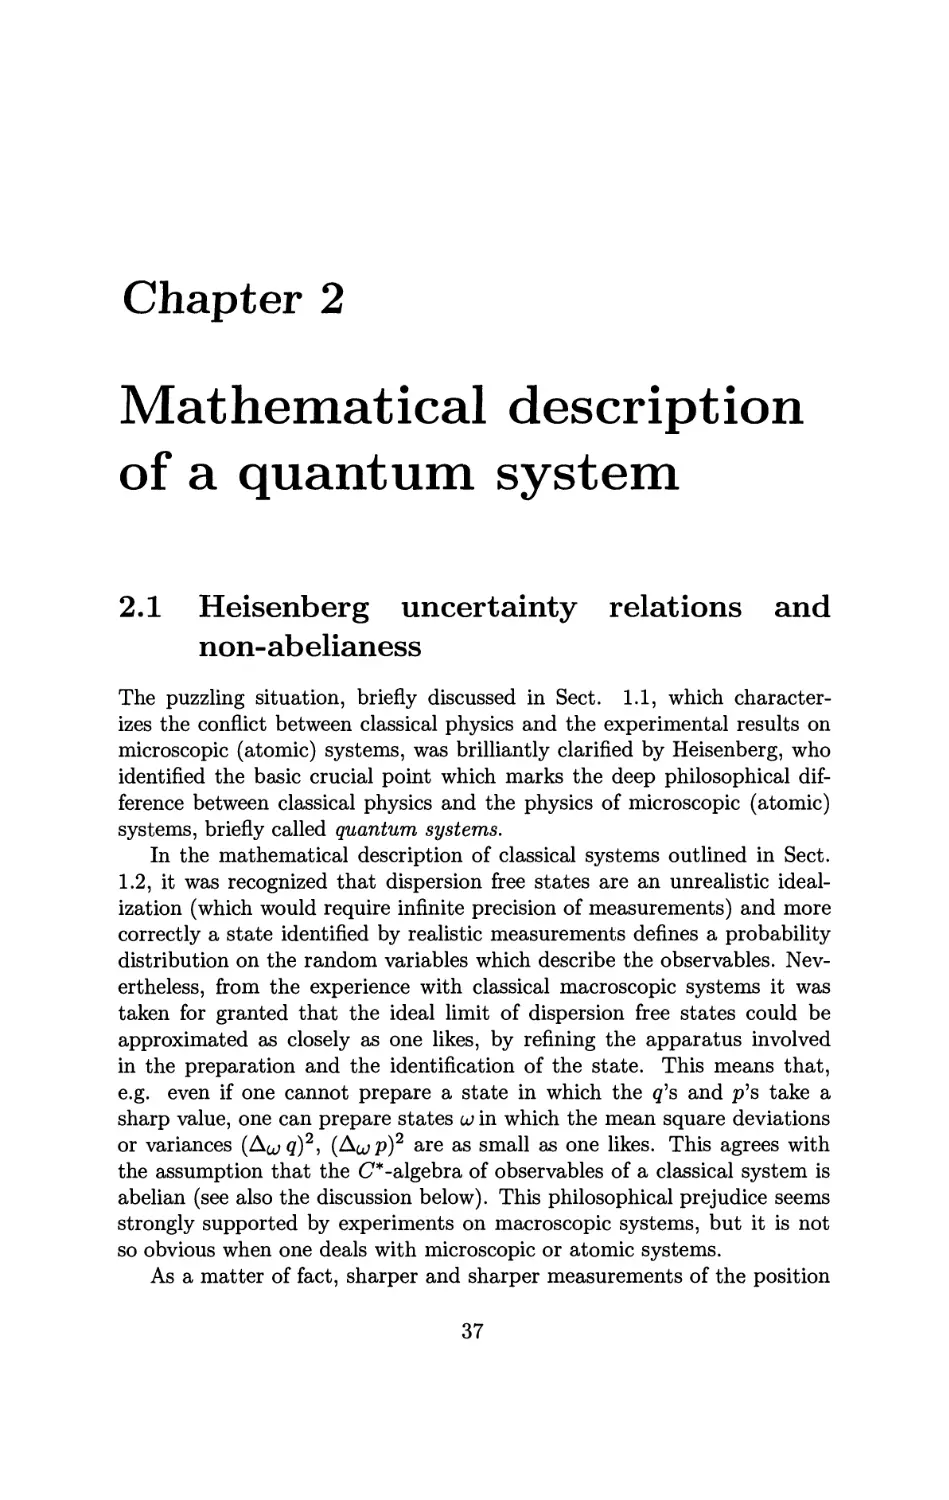 2 Mathematical description of a quantum system